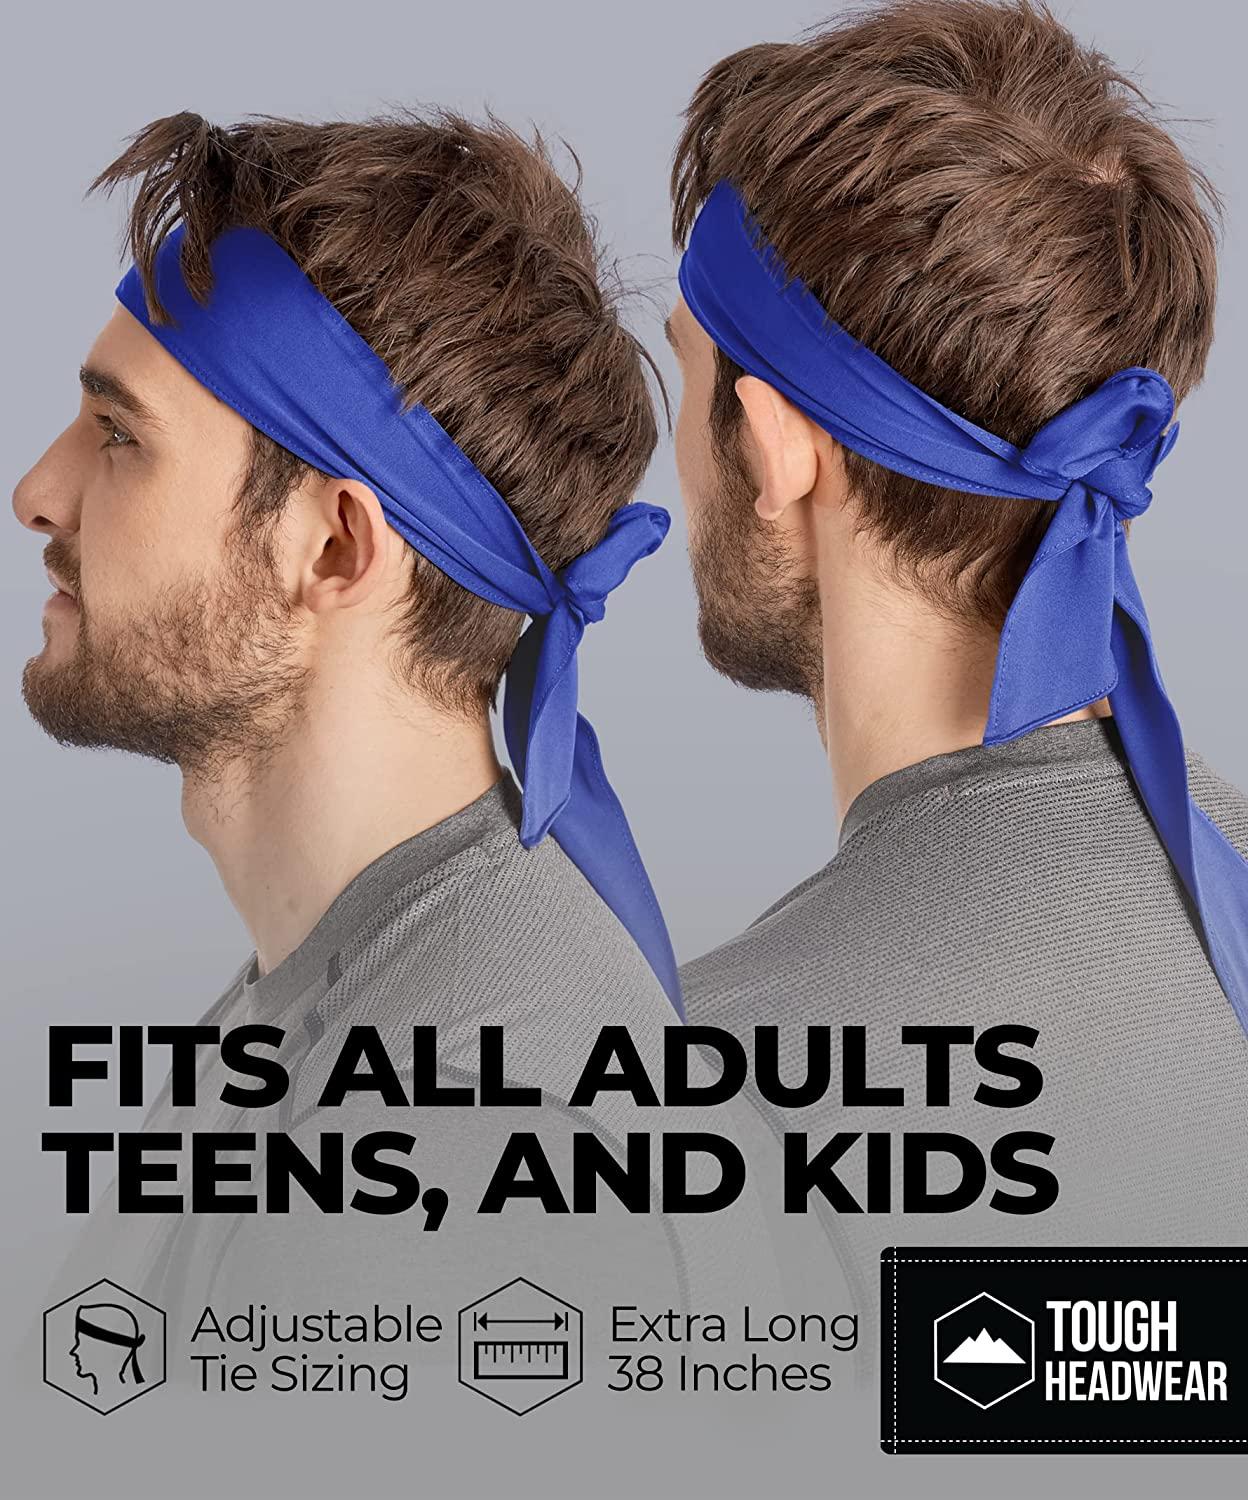 Sport Headbands for Men and Women – Bandanas Wholesale